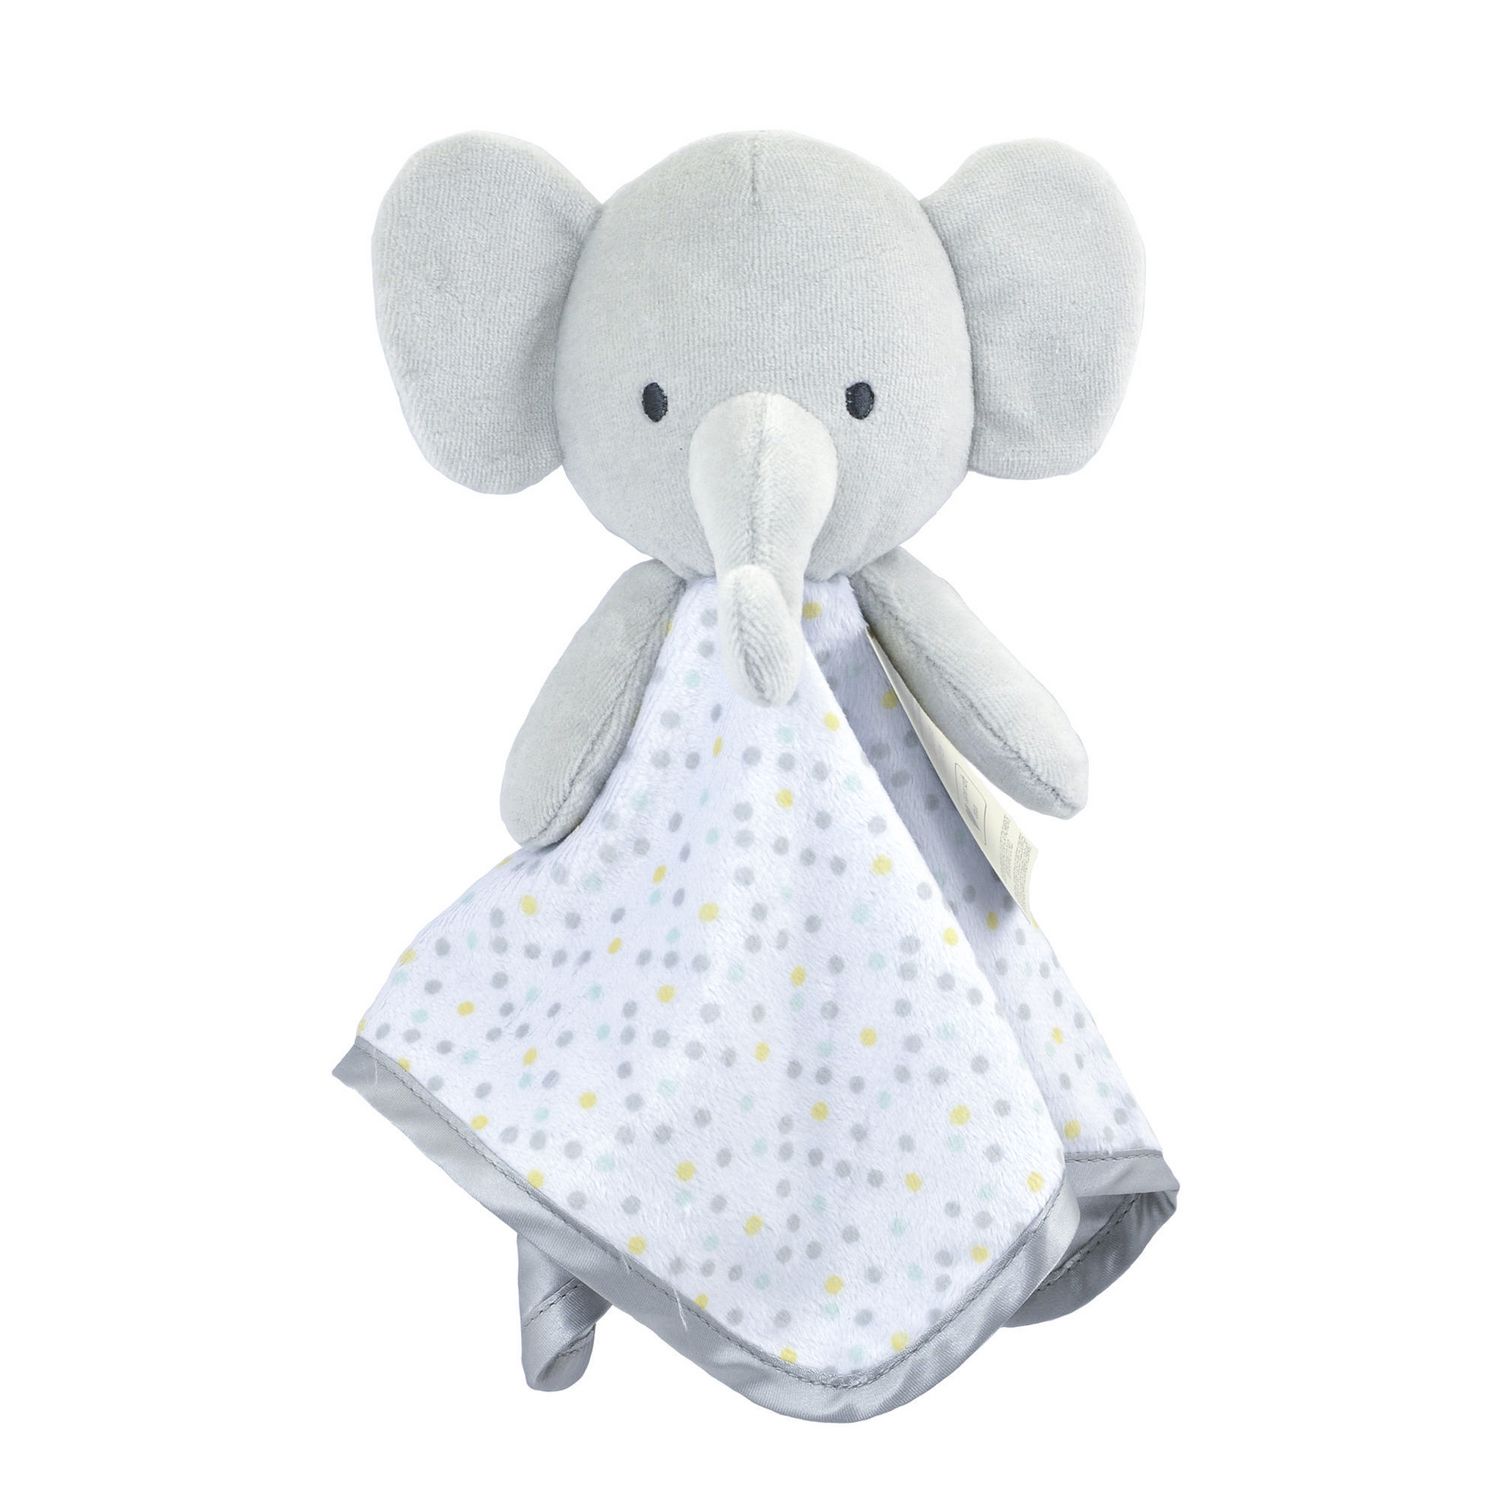 George Baby Security Blanket Elephant | Walmart Canada